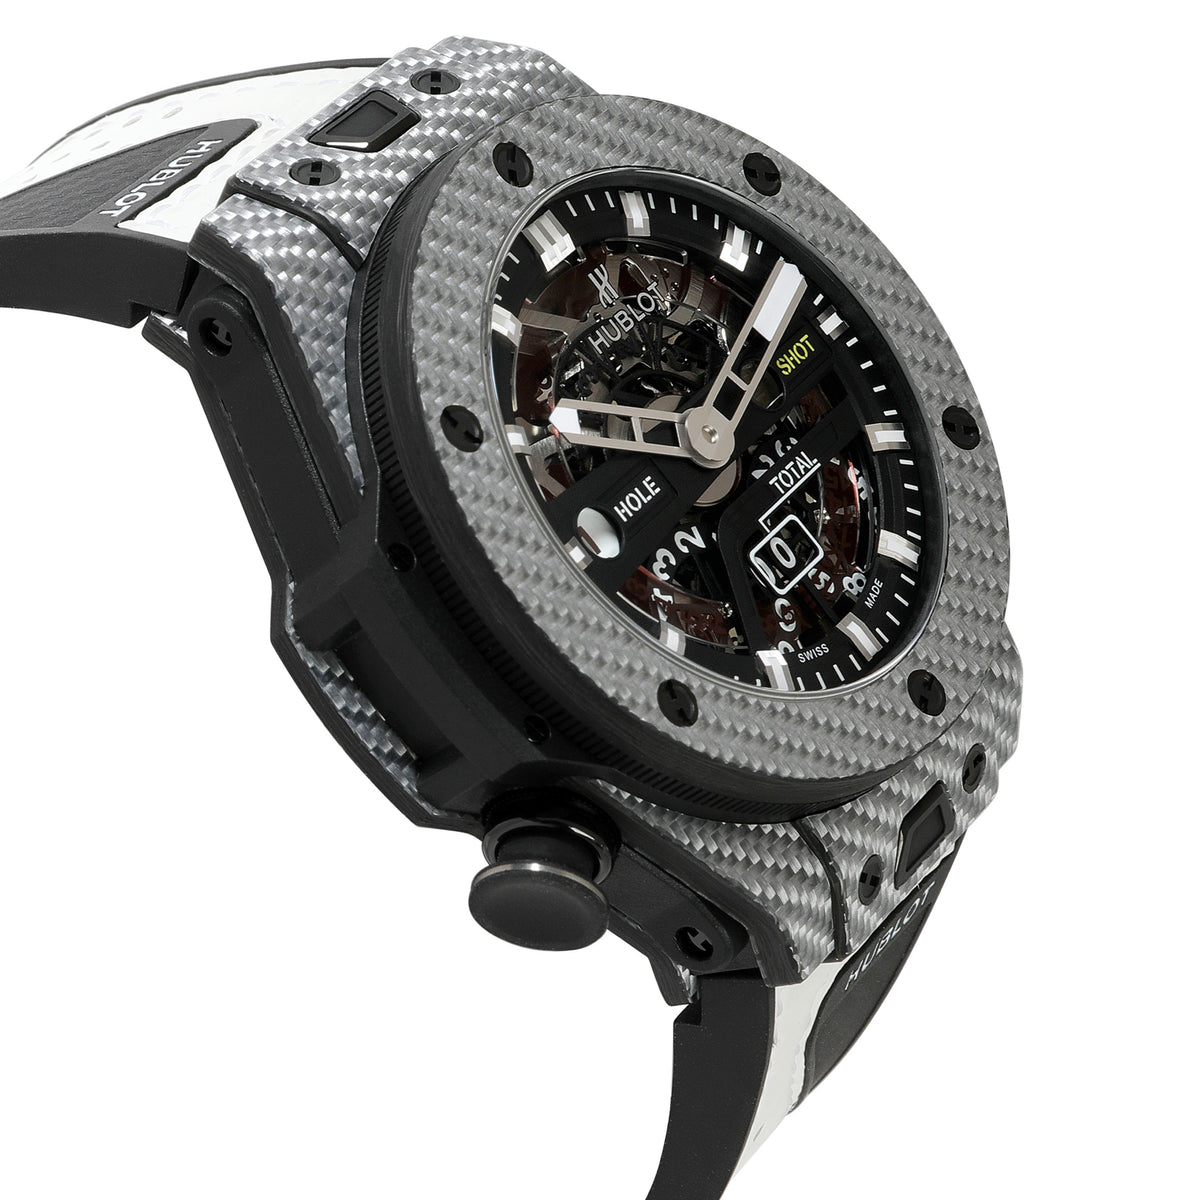 Hublot Big Bang Unico Golf 416.YS.1120.VR Men's Watch in  Carbon Fiber/Texalium